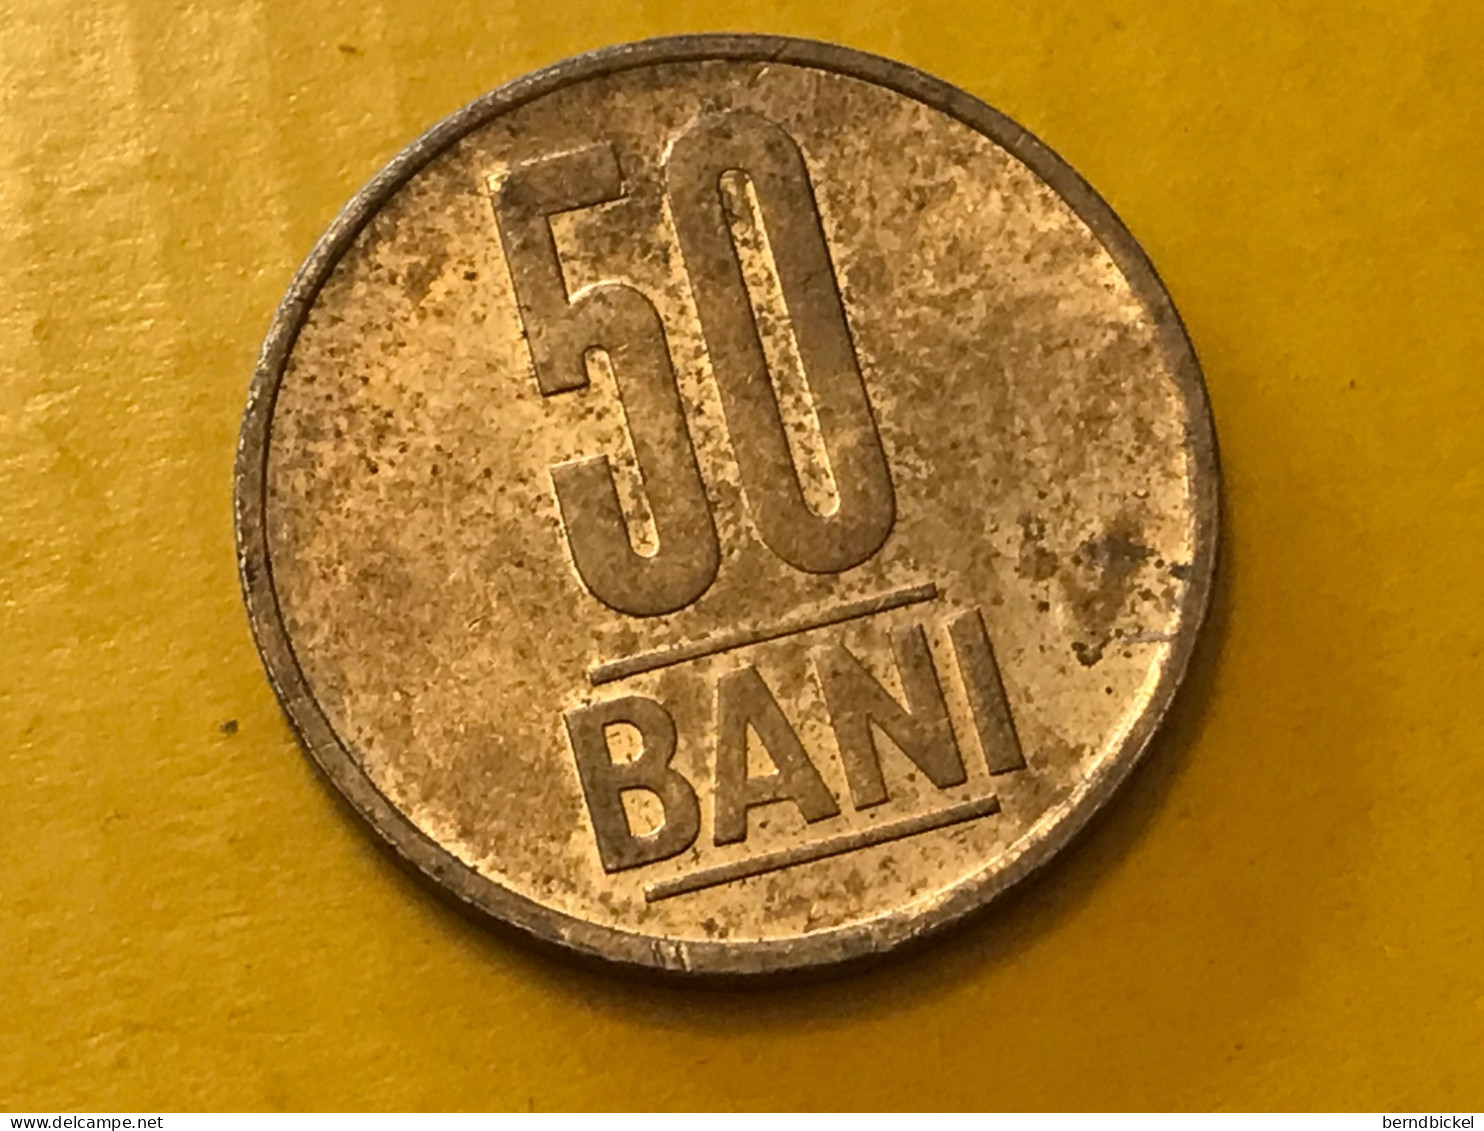 Münze Münzen Umlaufmünze Rumänien 50 Bani 2016 - Rumänien